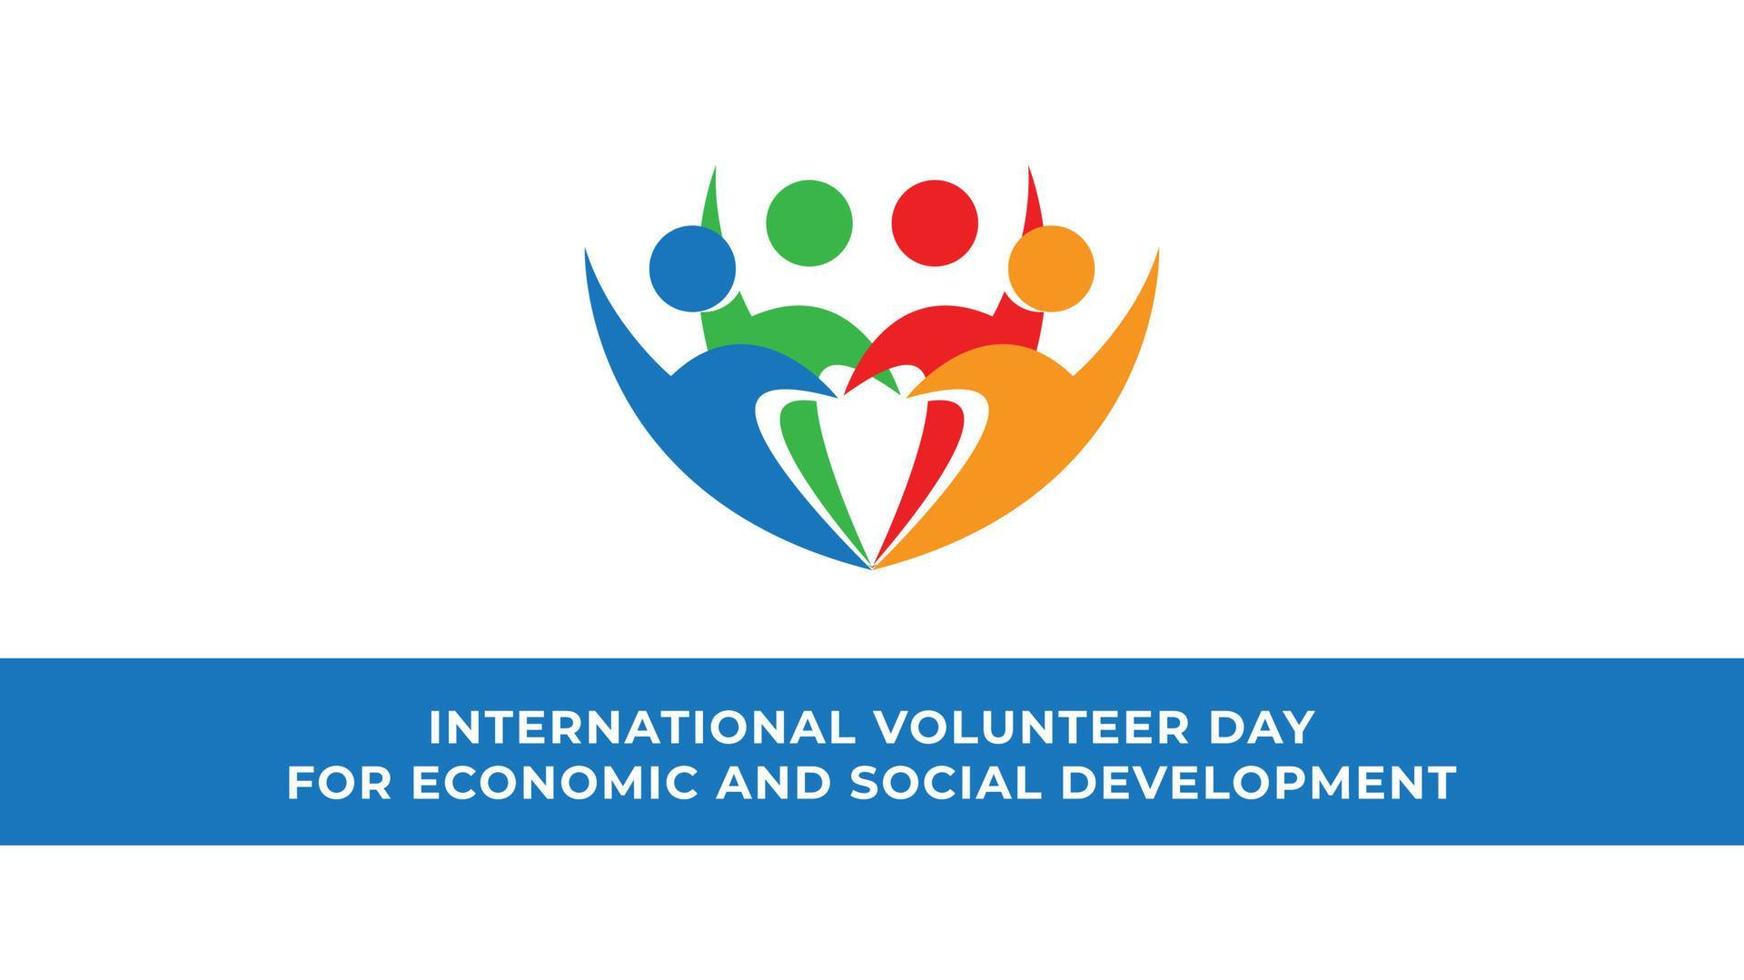 International Volunteer Day for Economic and Social Development. Vector illustration